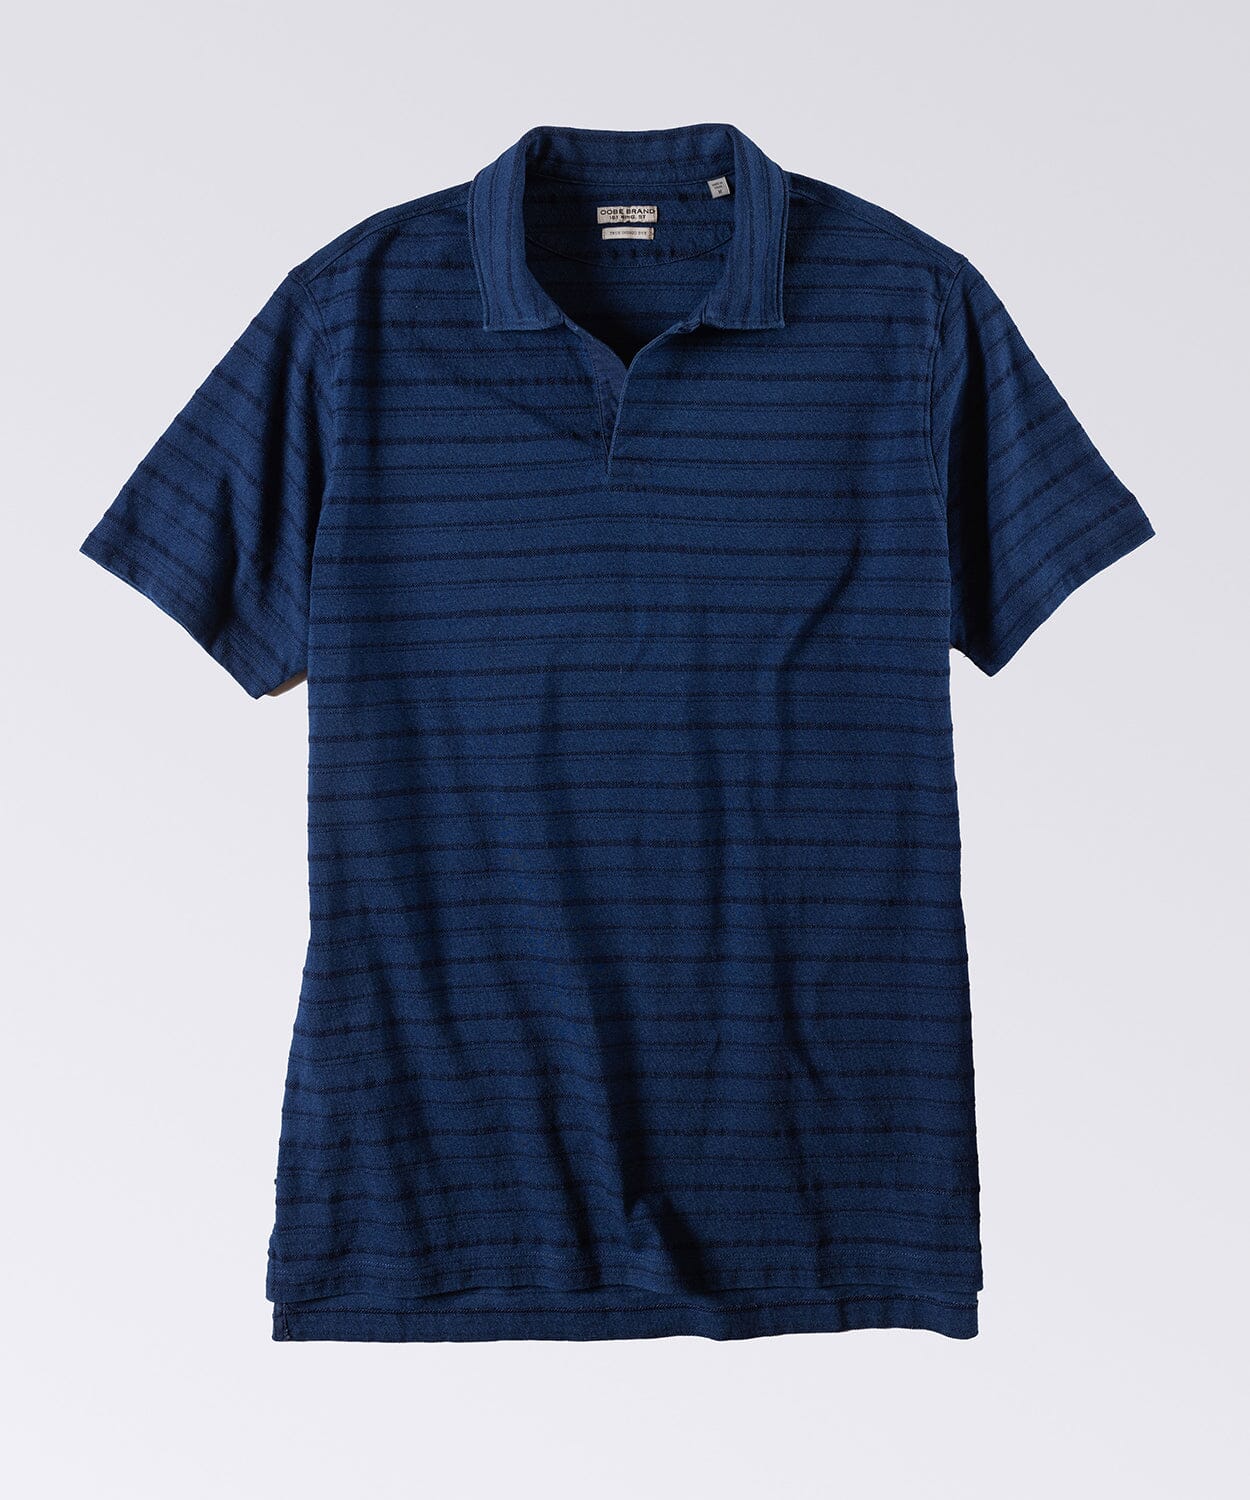 mens blue stripe polo shirt by oobe brand